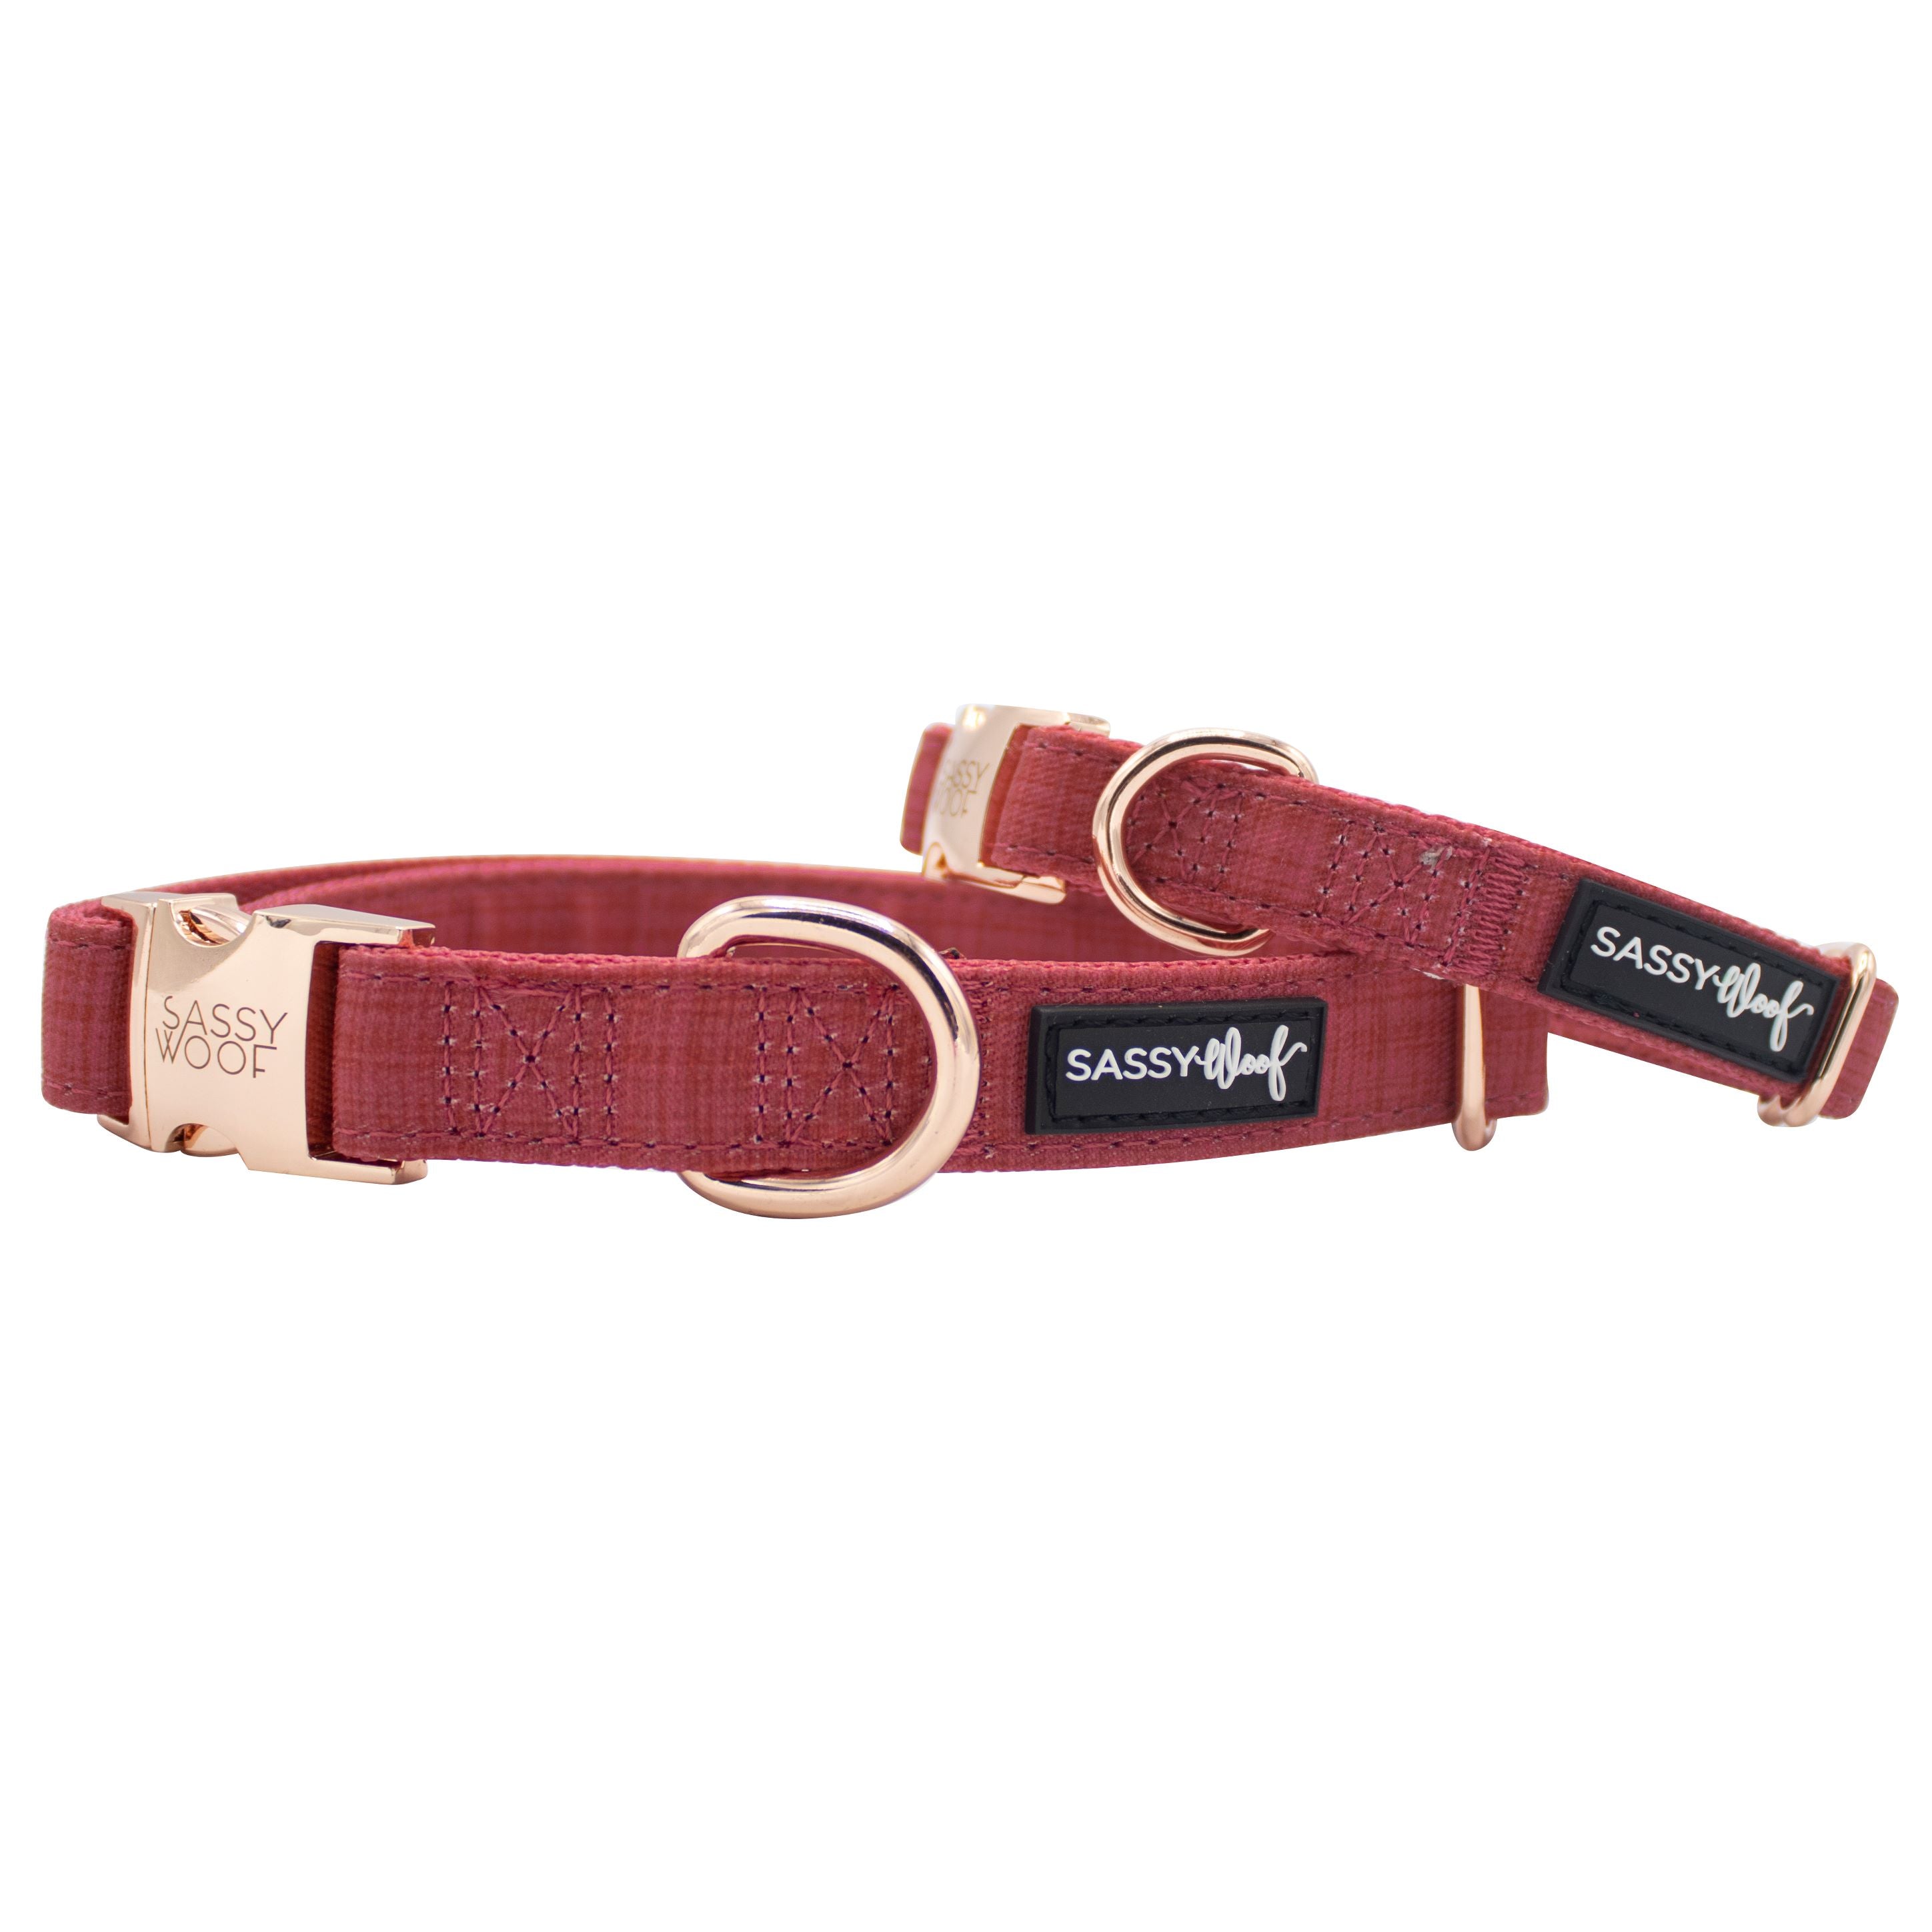 Merlot Harness - Merlot leather harness for dogs